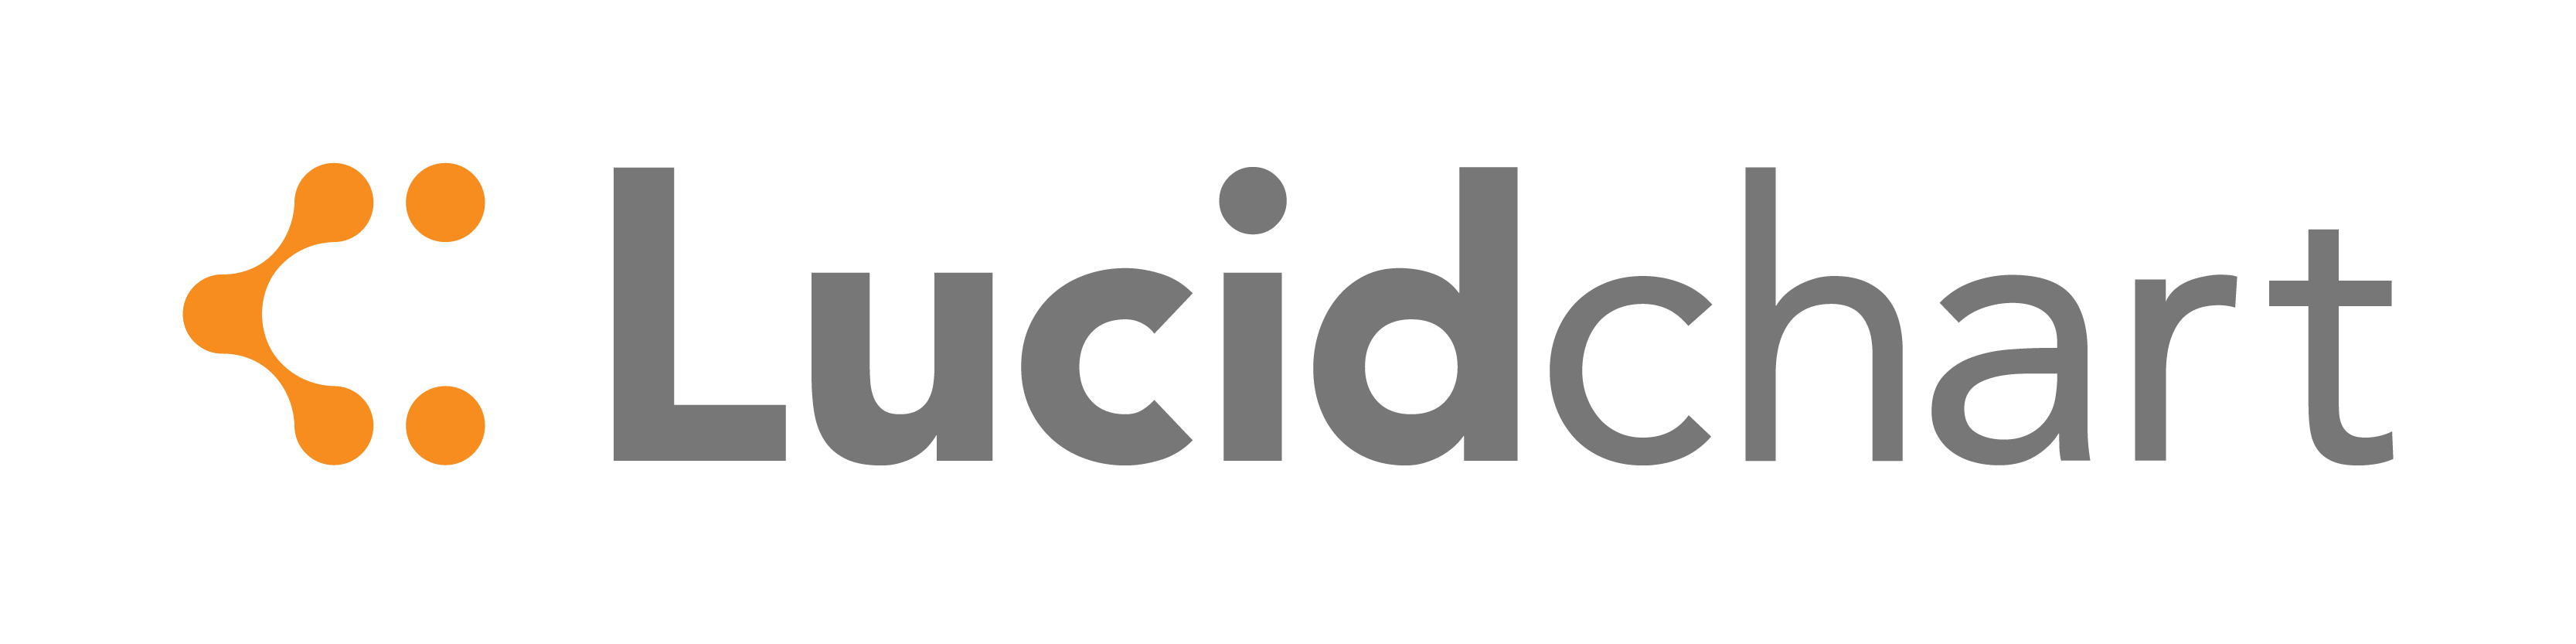 Lucidchart logo